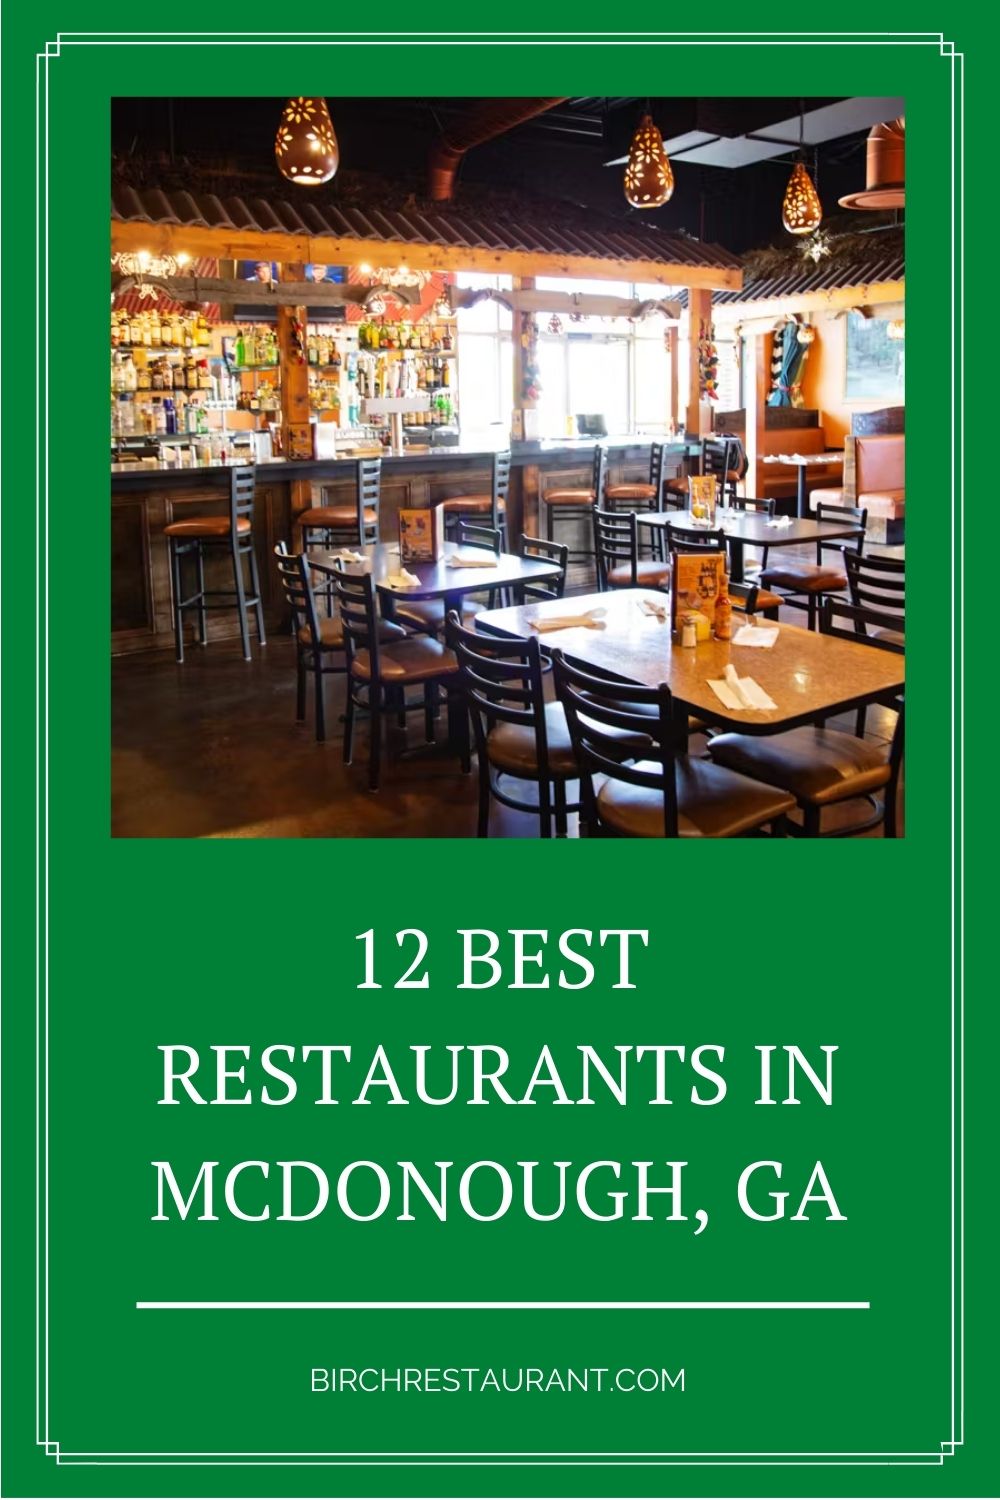 Best Restaurants in Mcdonough